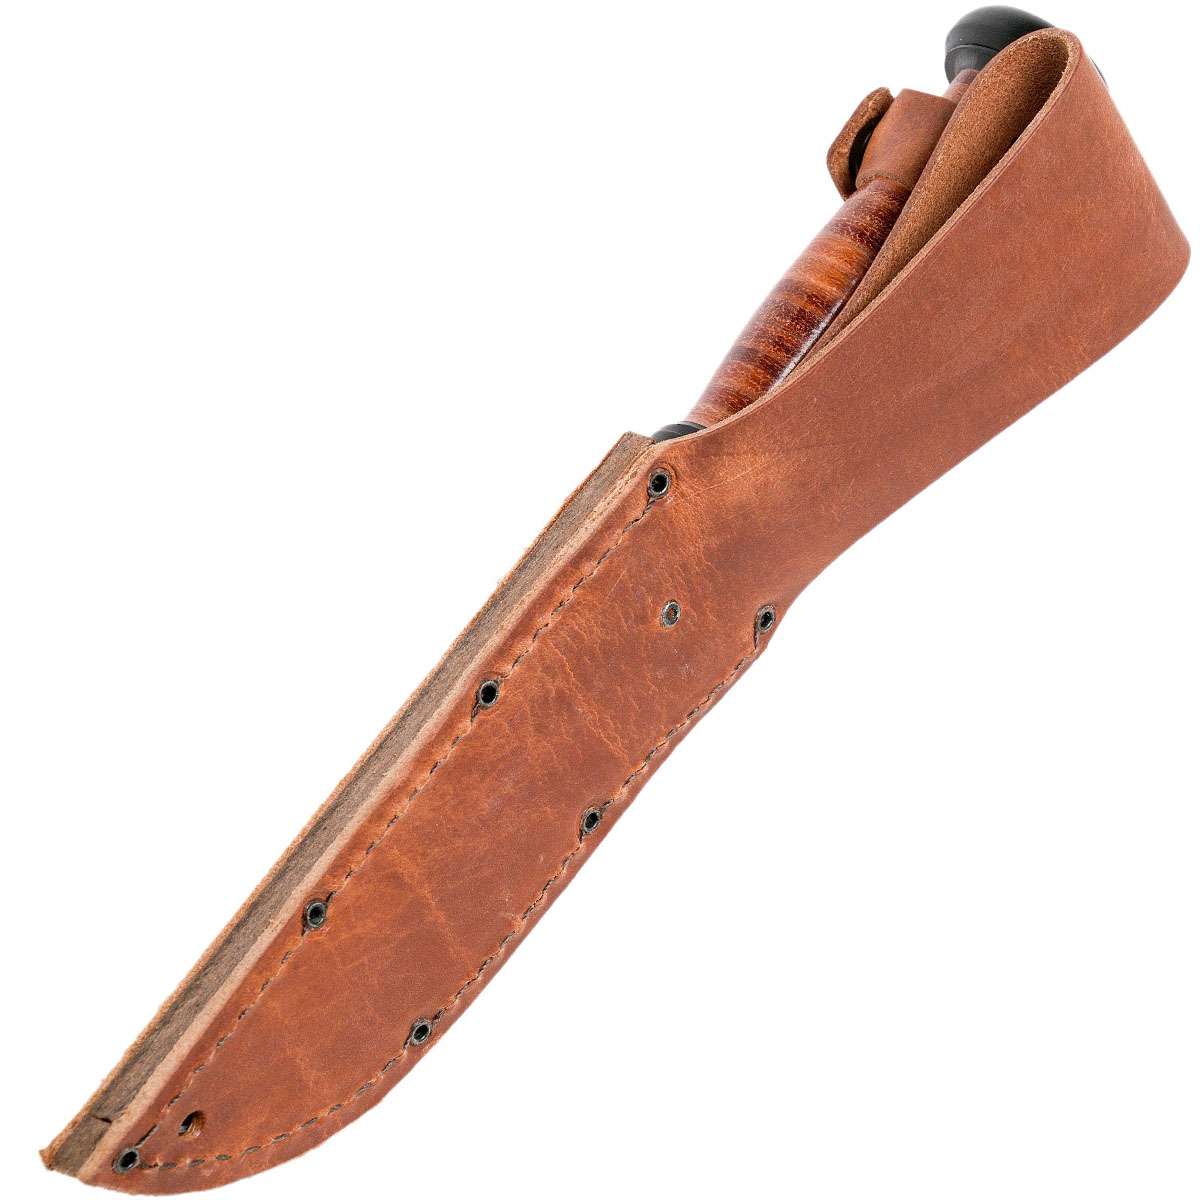 KA-BAR Mark I USN 2225 Knife - Brown Leather